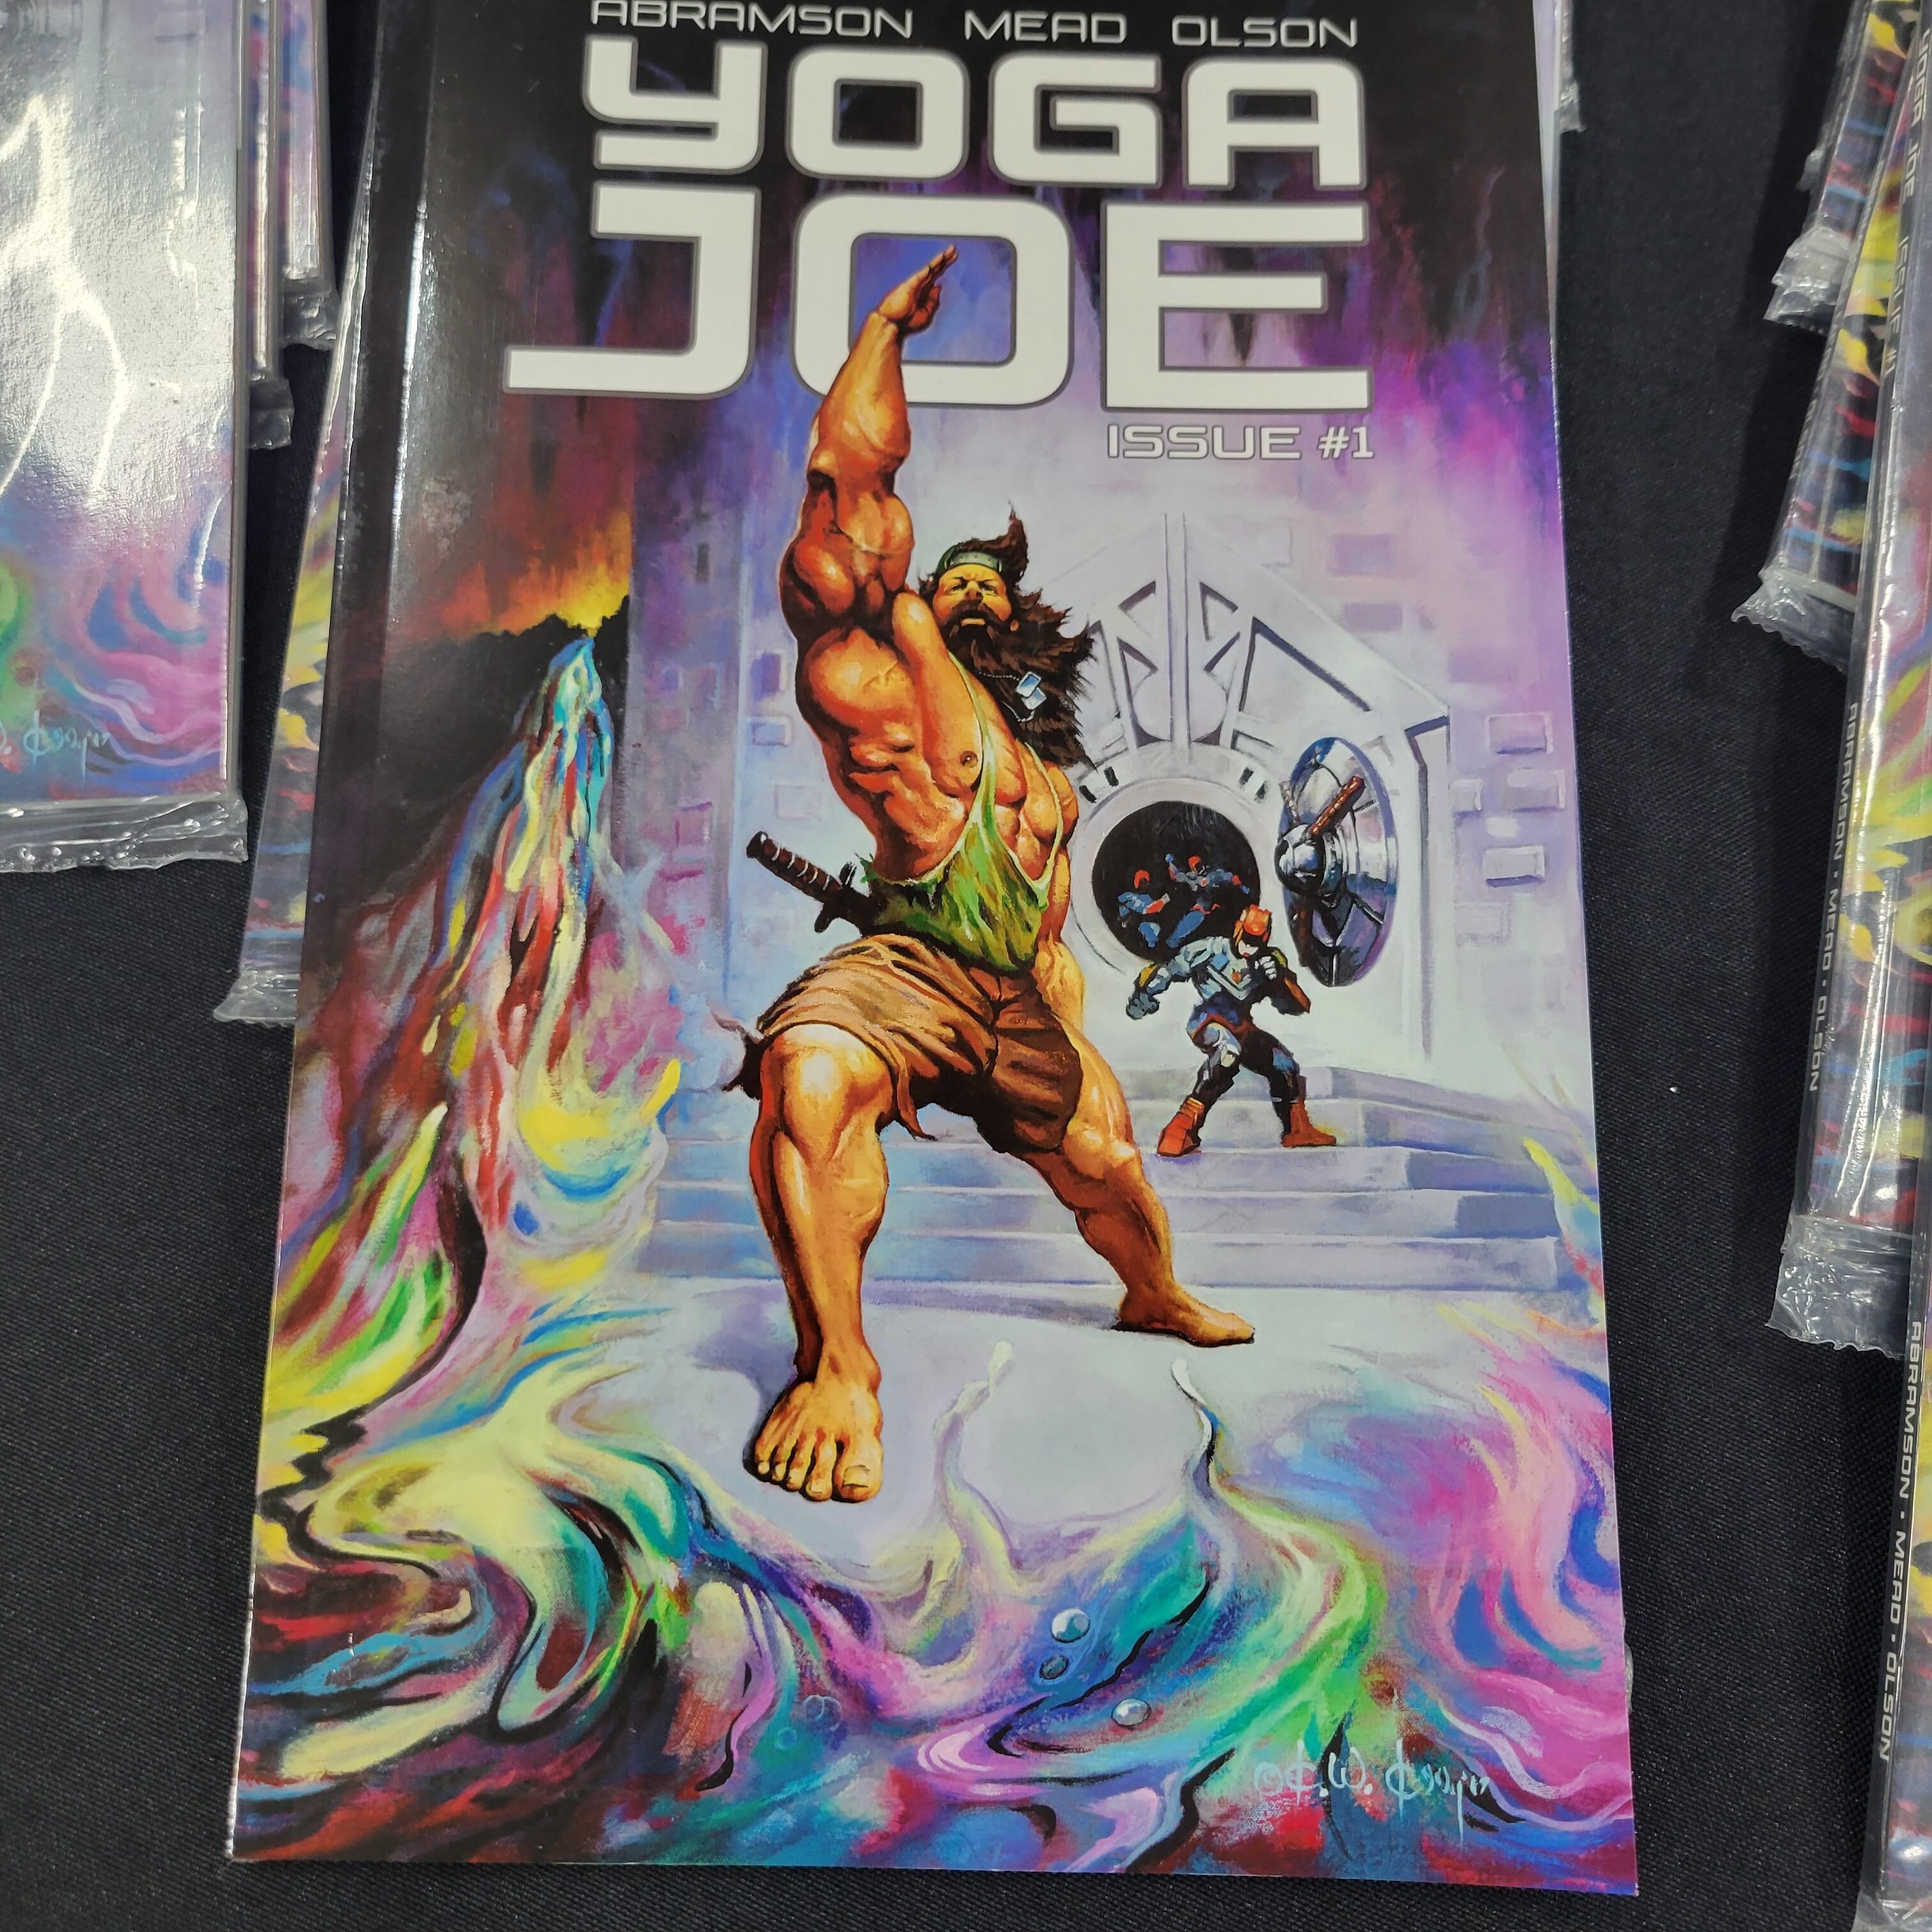 Yoga Joe very interesting